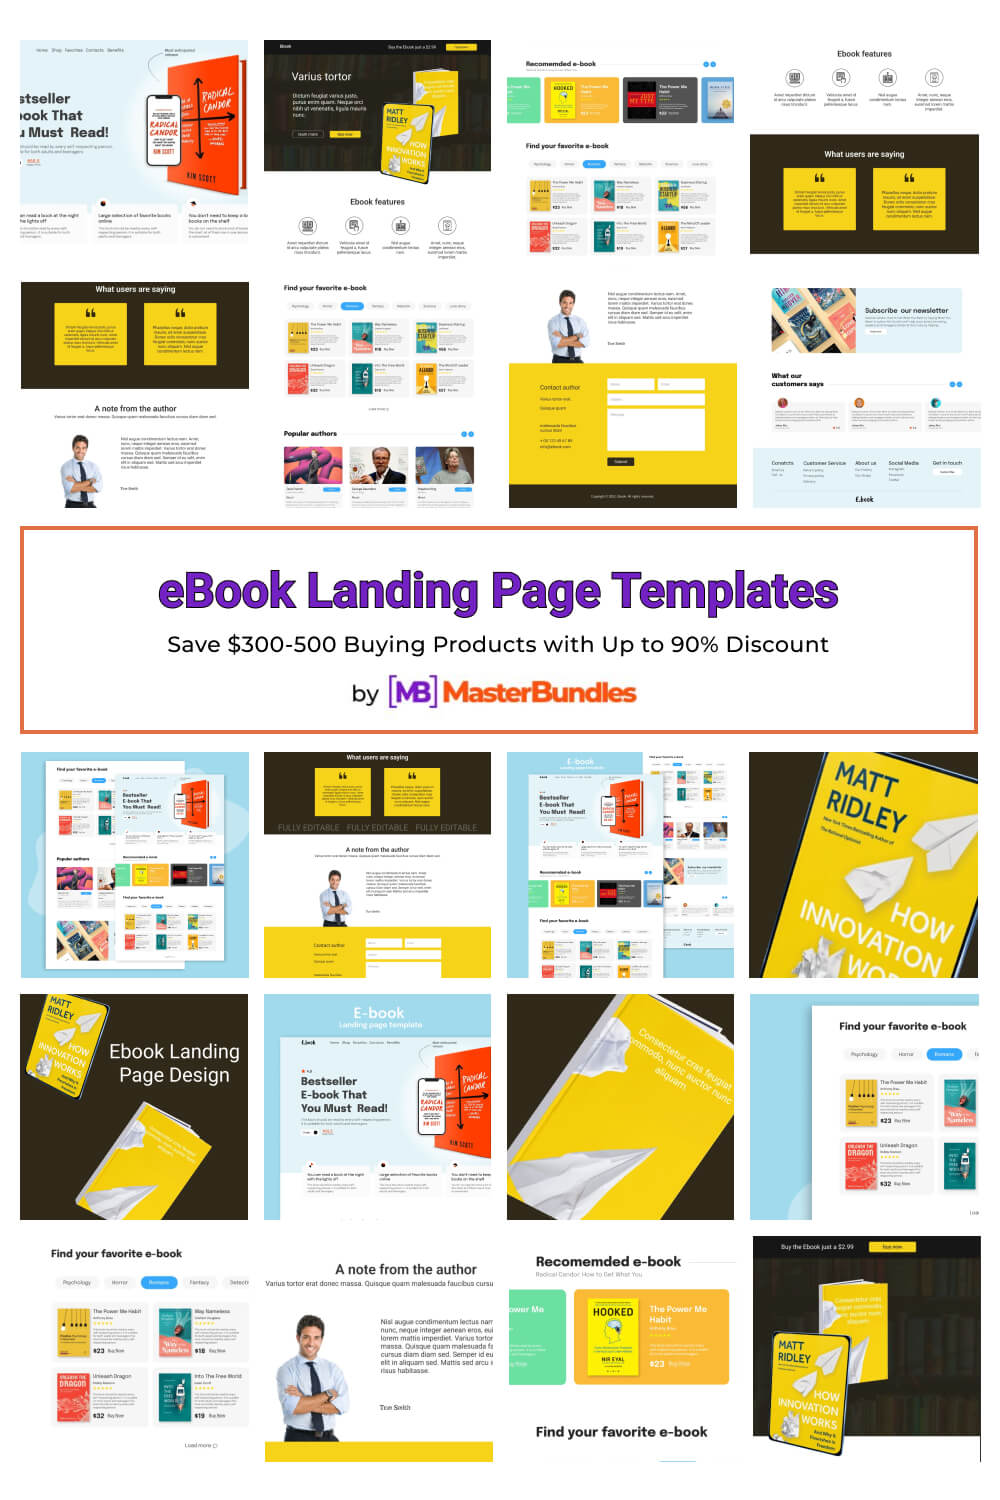 ebook landing page templates pinterest image.